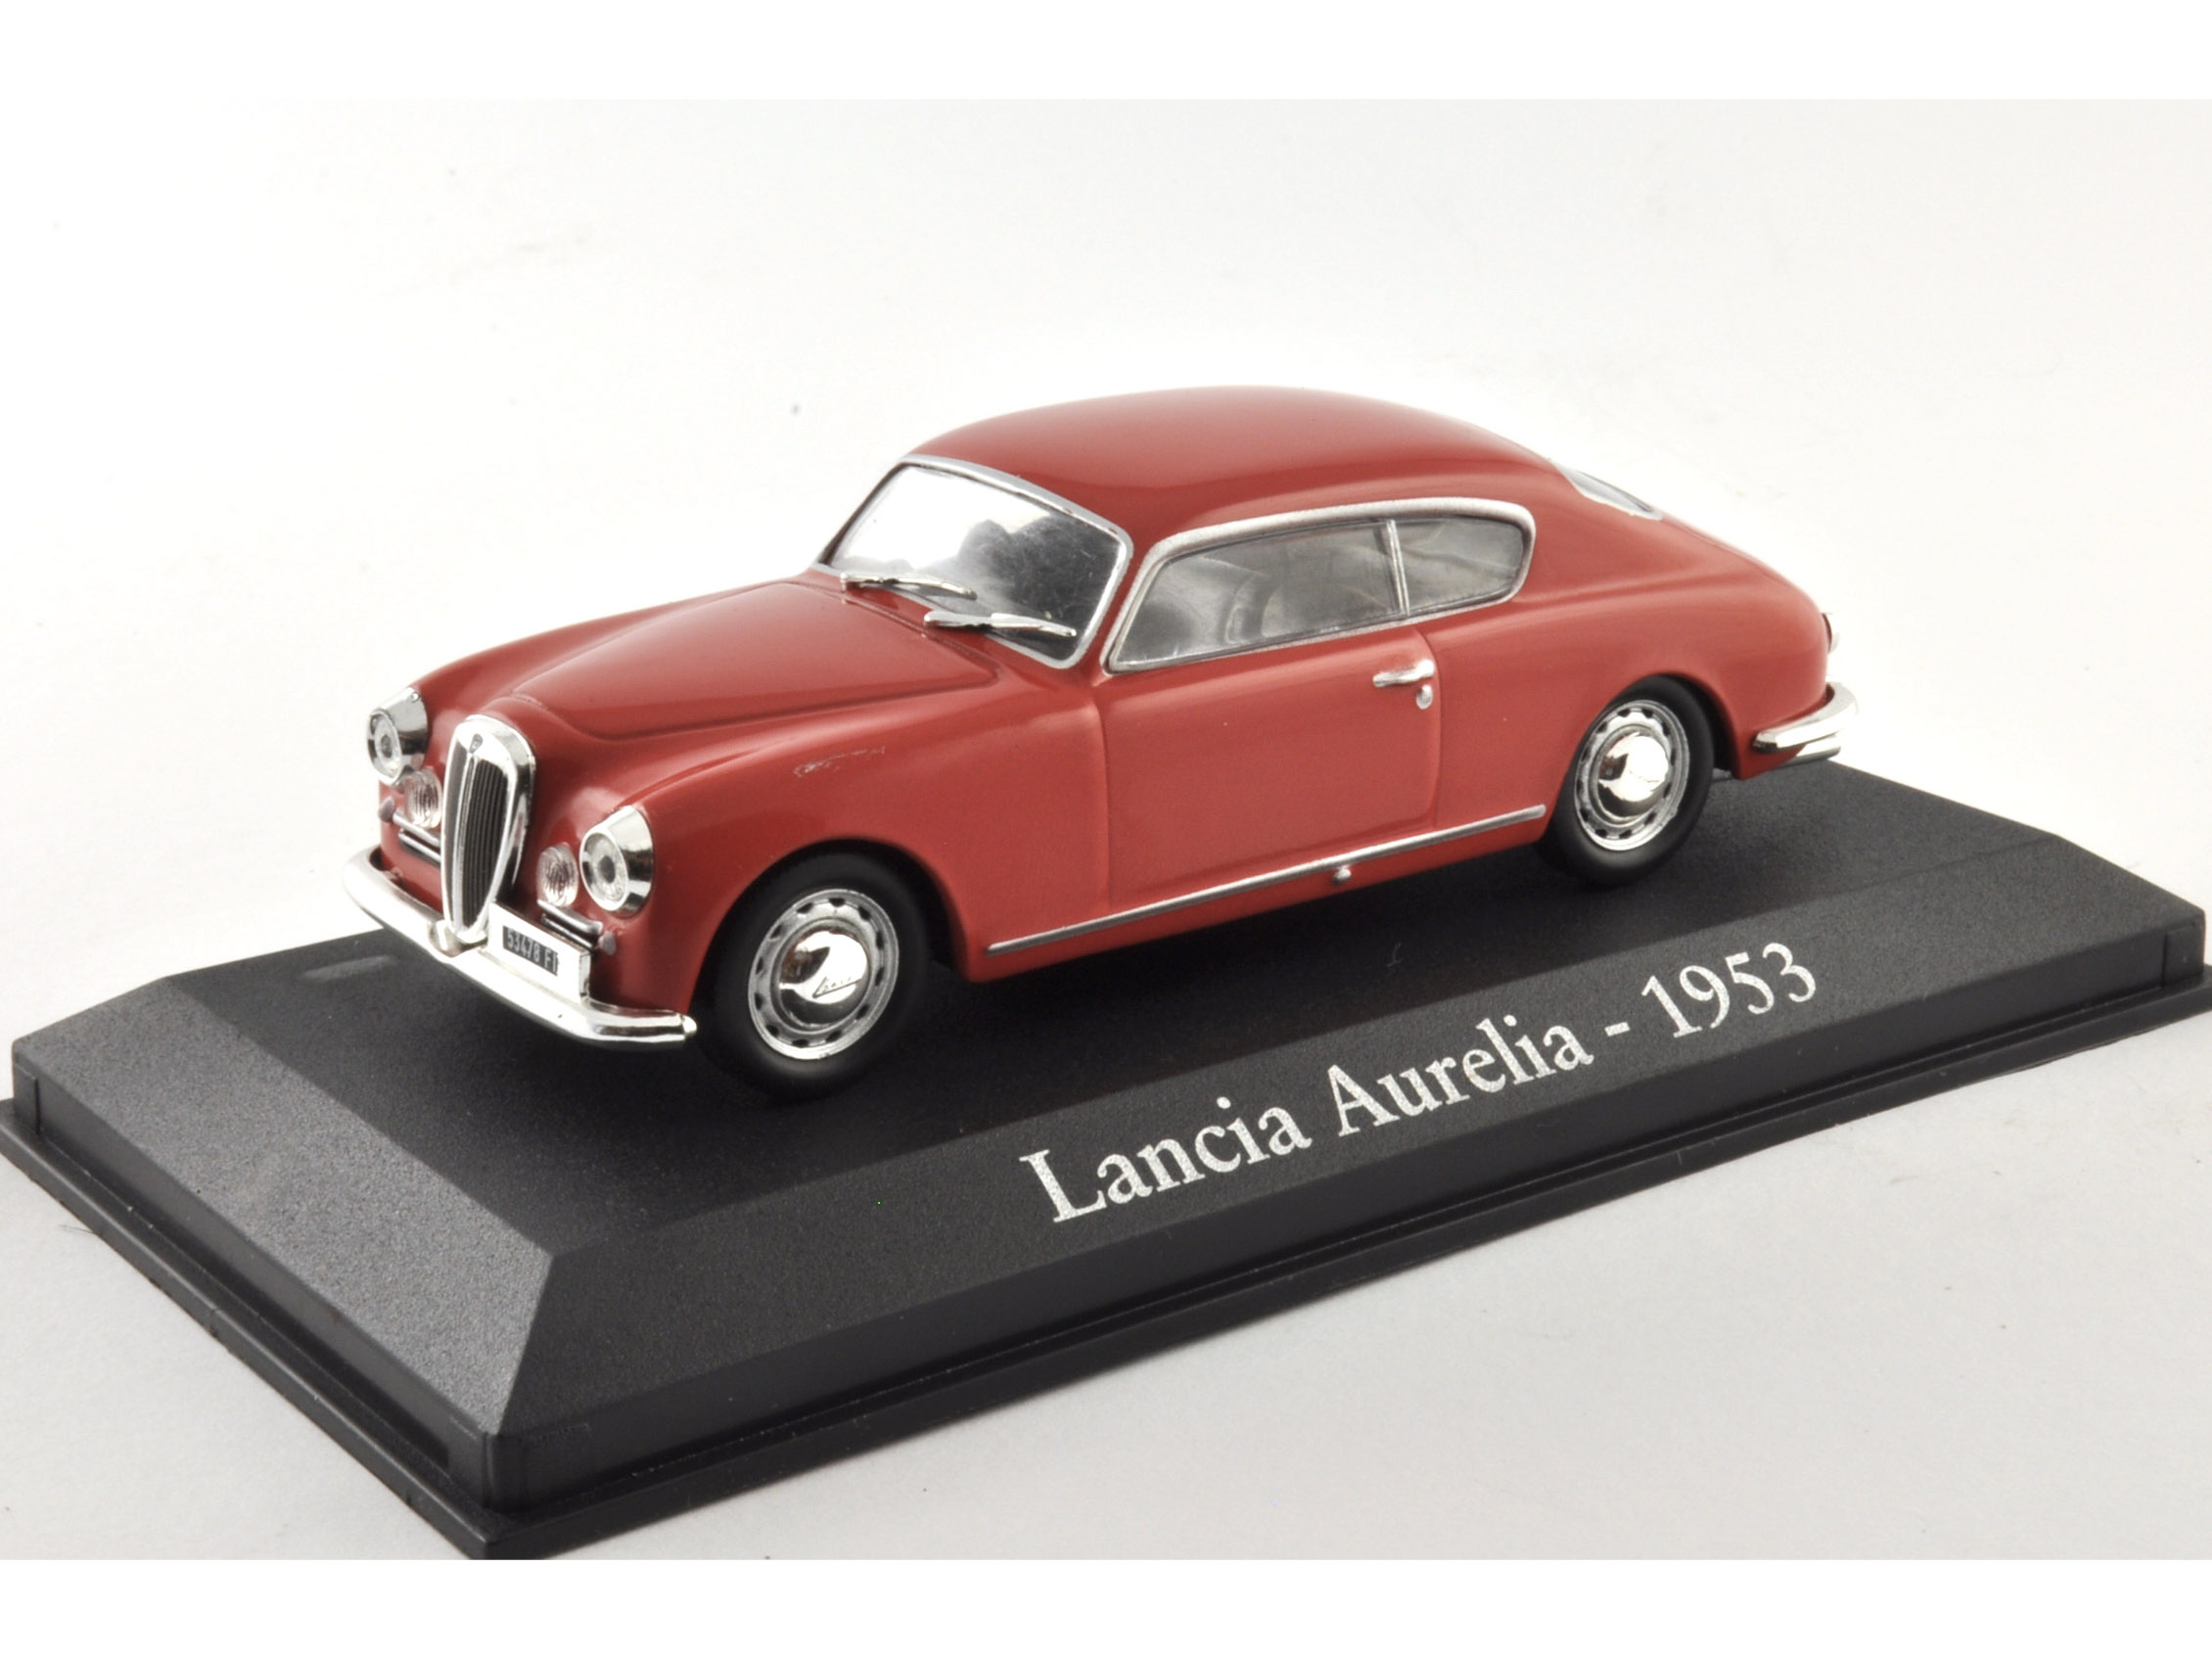 Lancia Aurelia - 1953